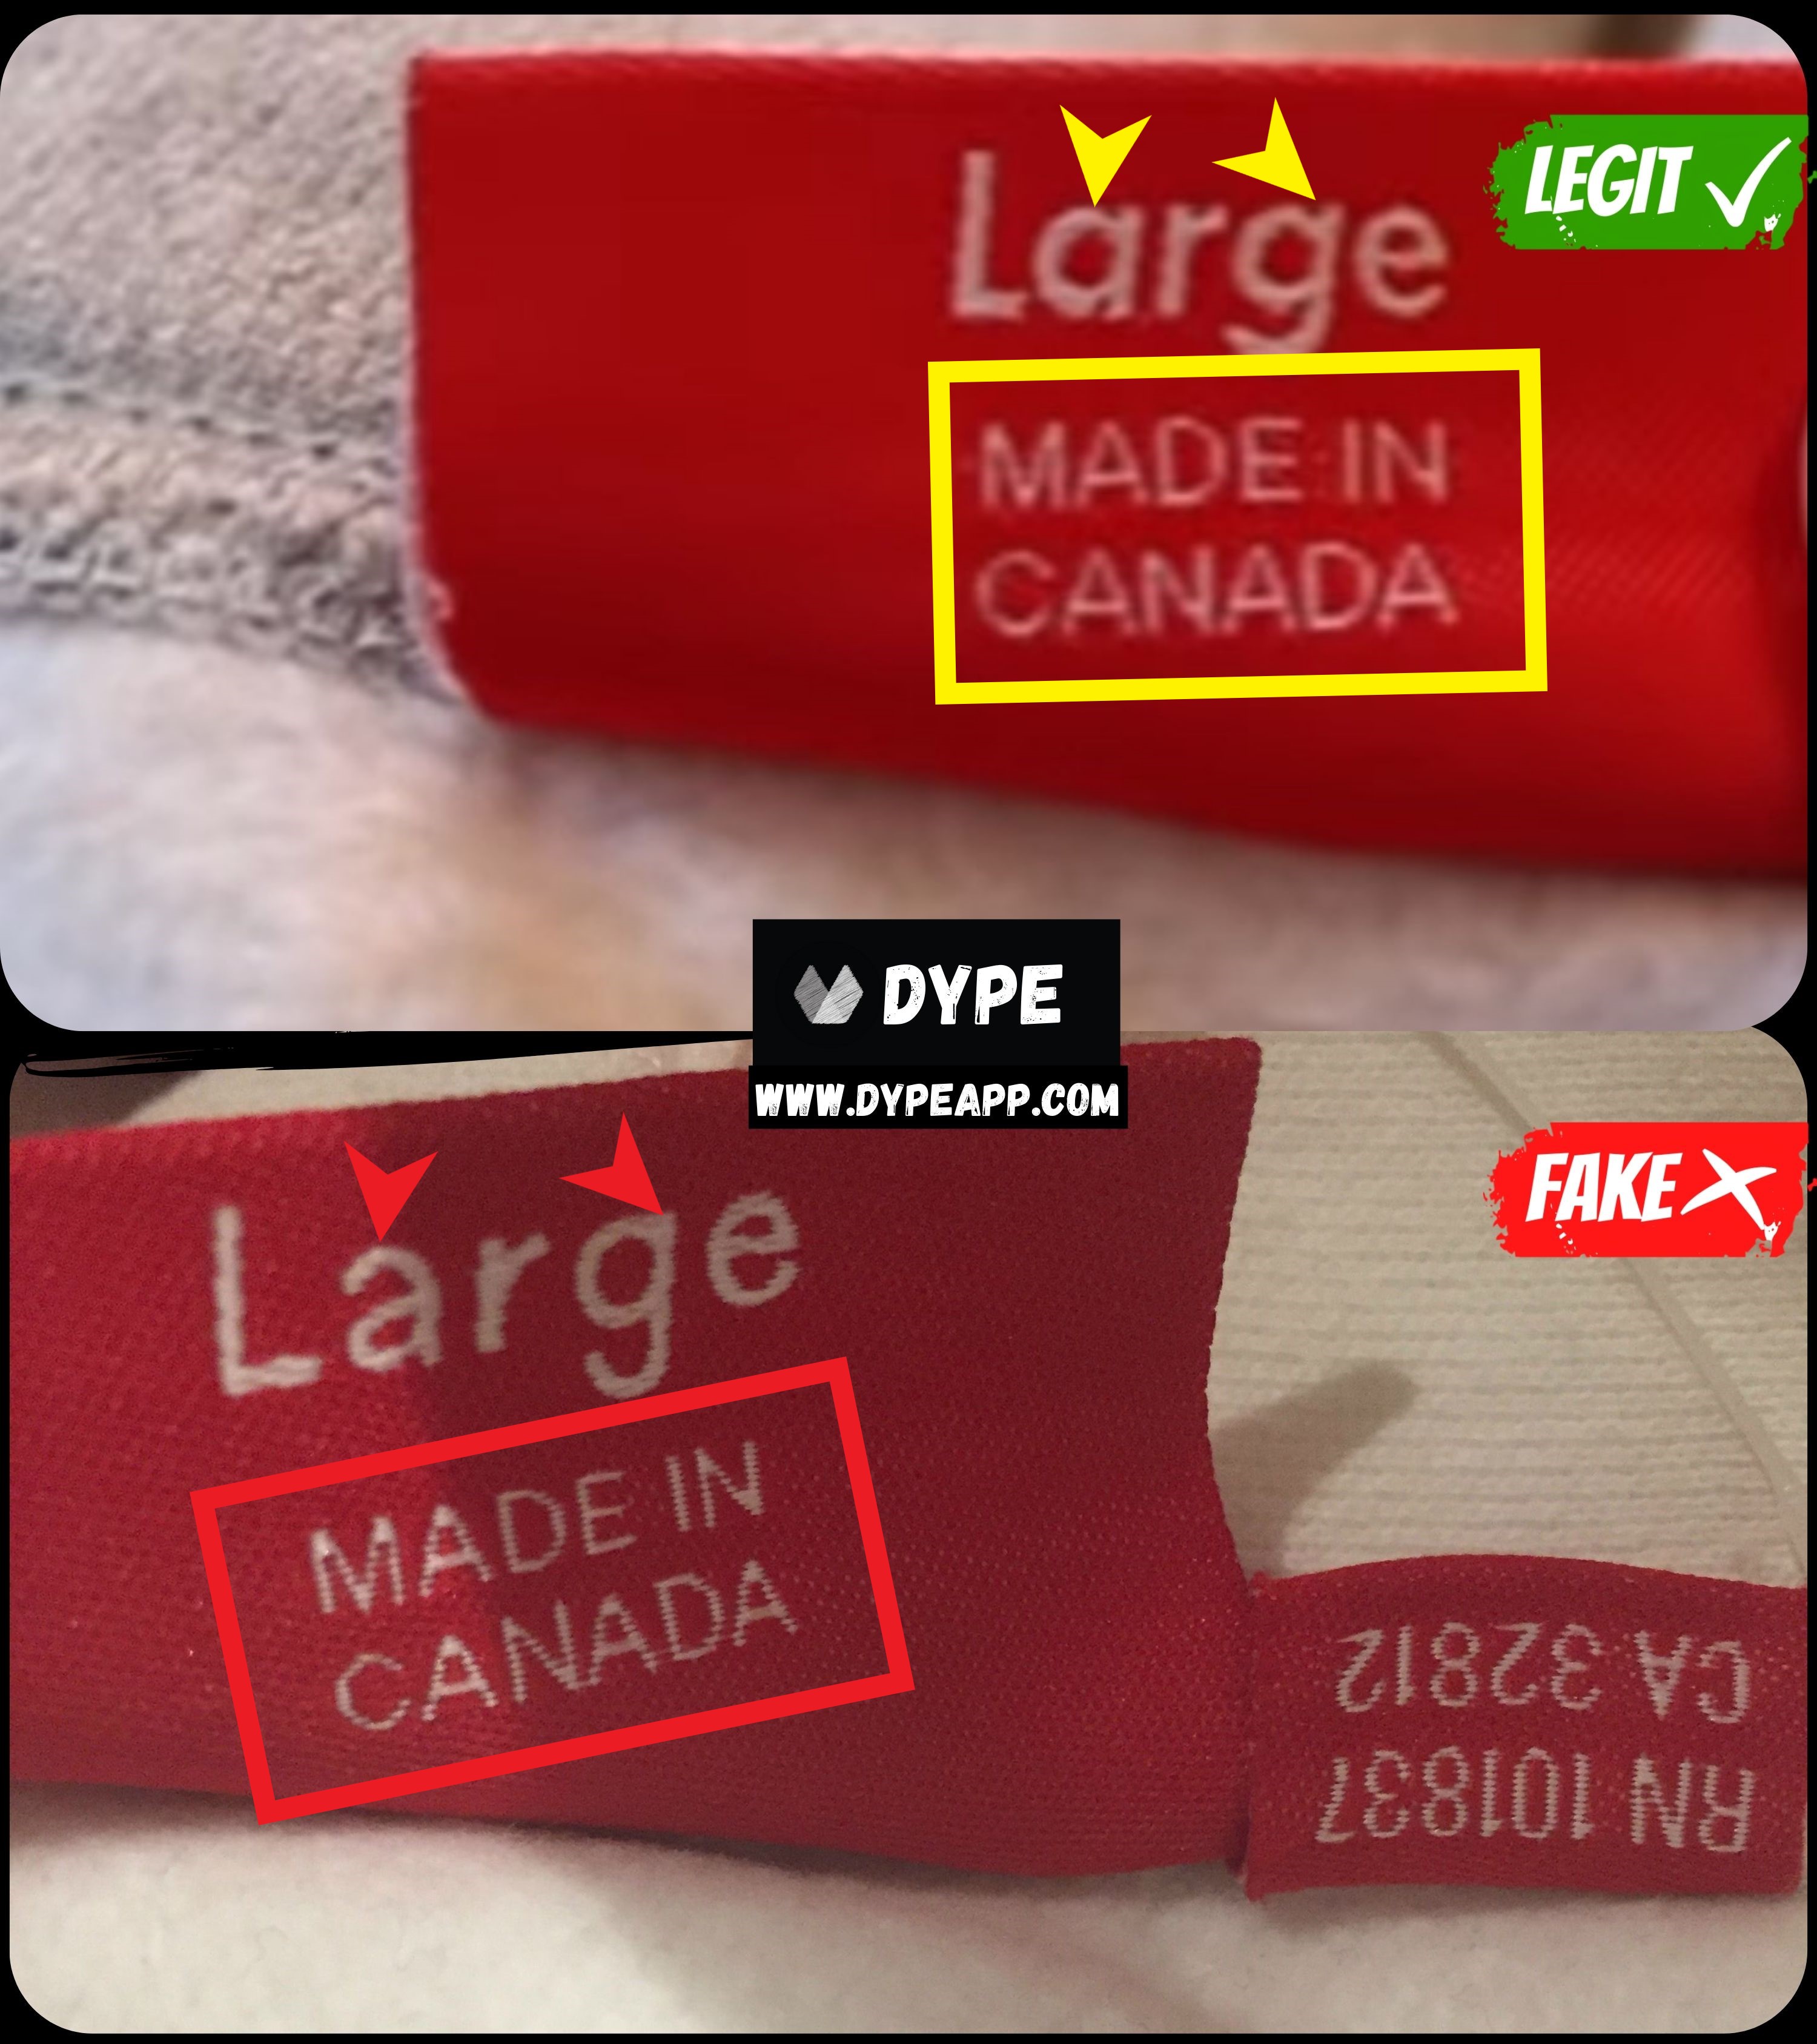 Step 3: Check the wash tag of your Supreme x LV box logo t-shirt